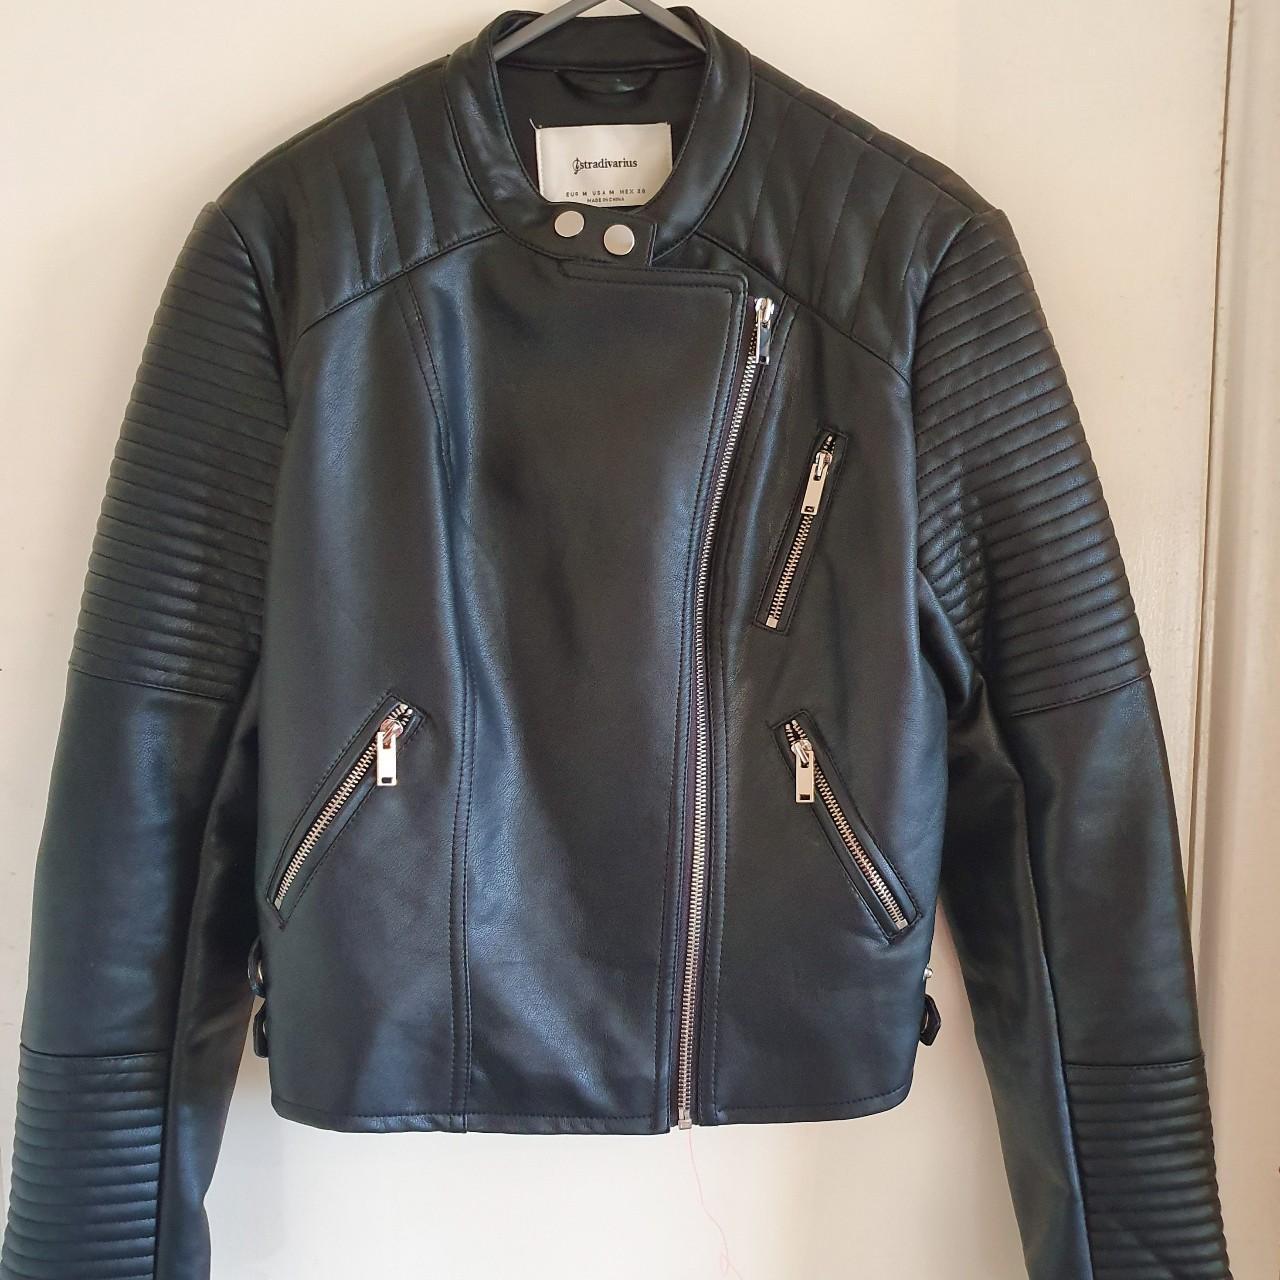 Stradivarius vegan leather biker jacket, tried on a... - Depop